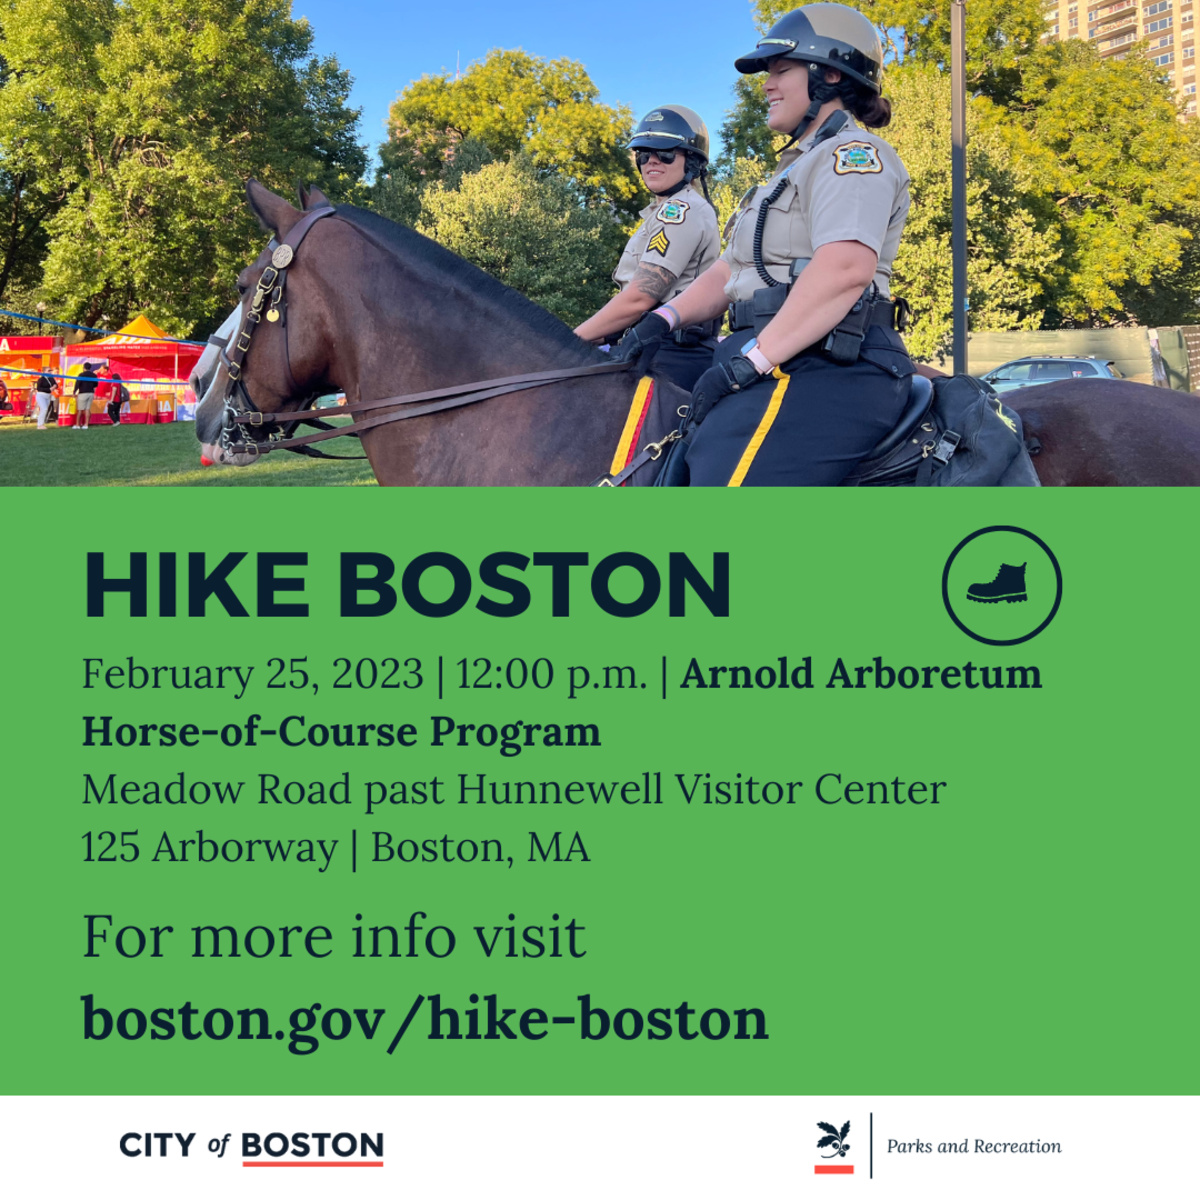 Promo image with info on program - 2 park rangers on horseback in a park